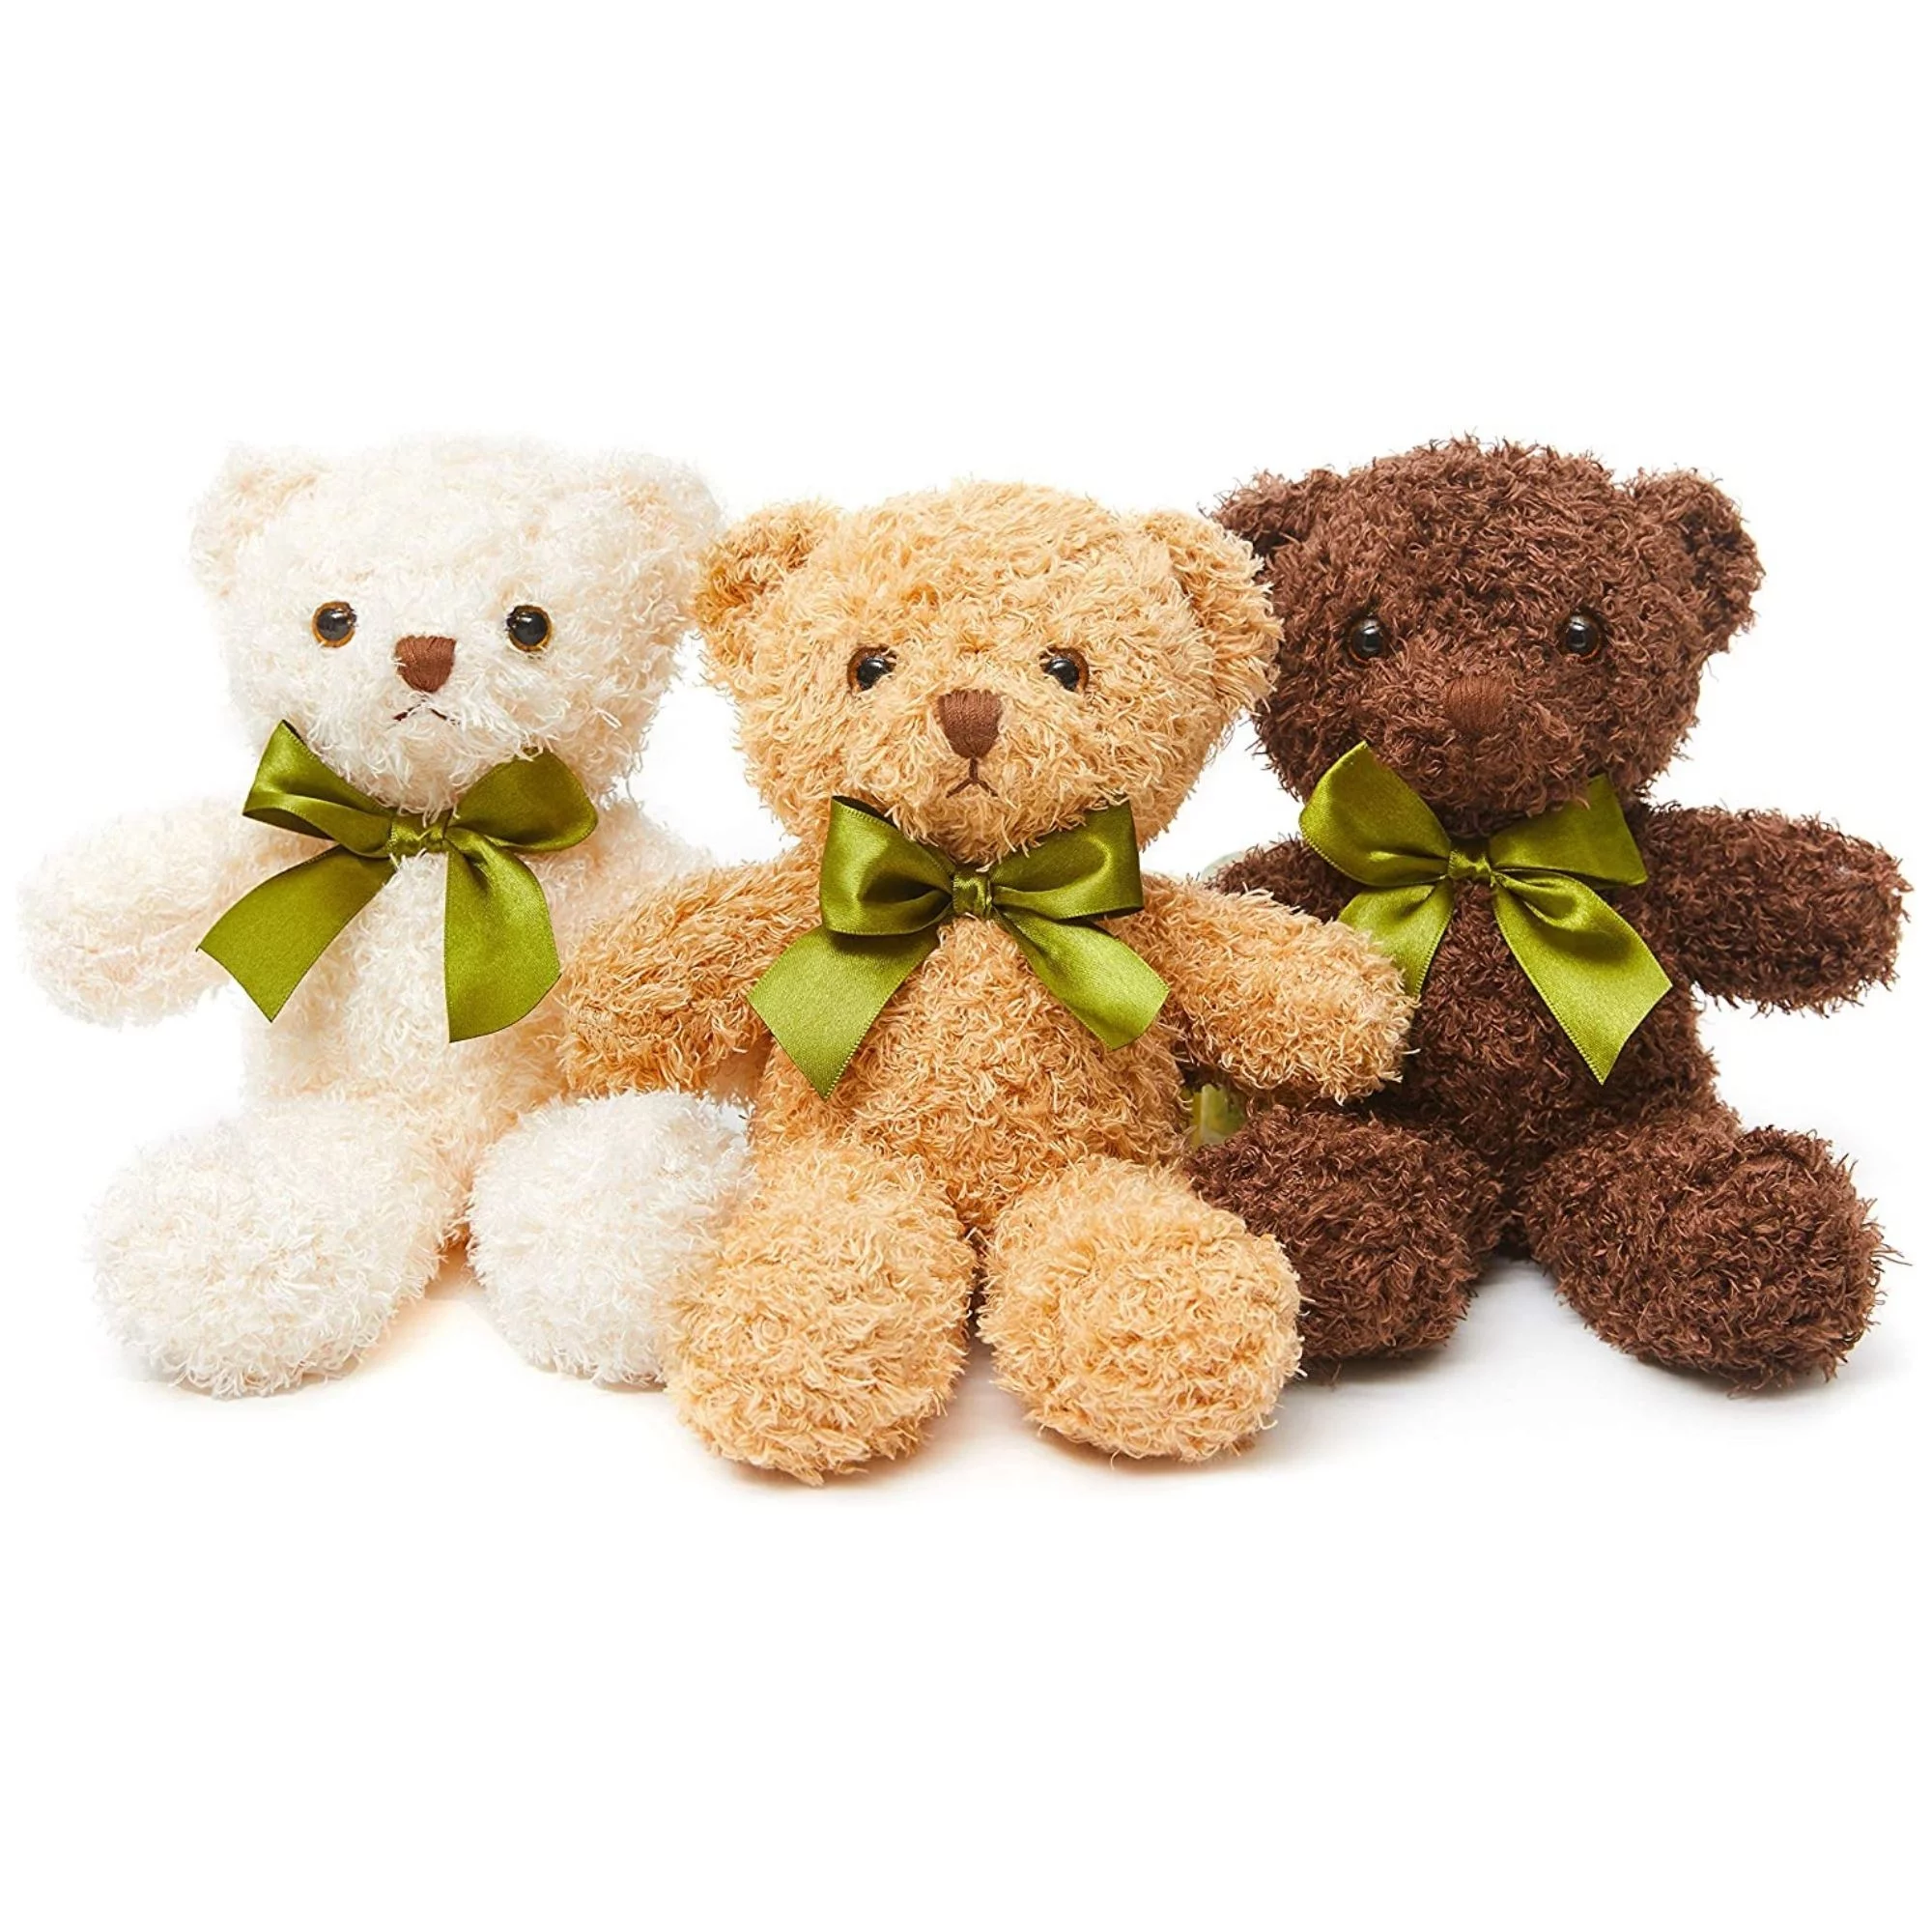 MorisMos 3 Packs Cute Teddy Bear Stuffed Animal with Bow Ties Plush Toys 9.8 Inch